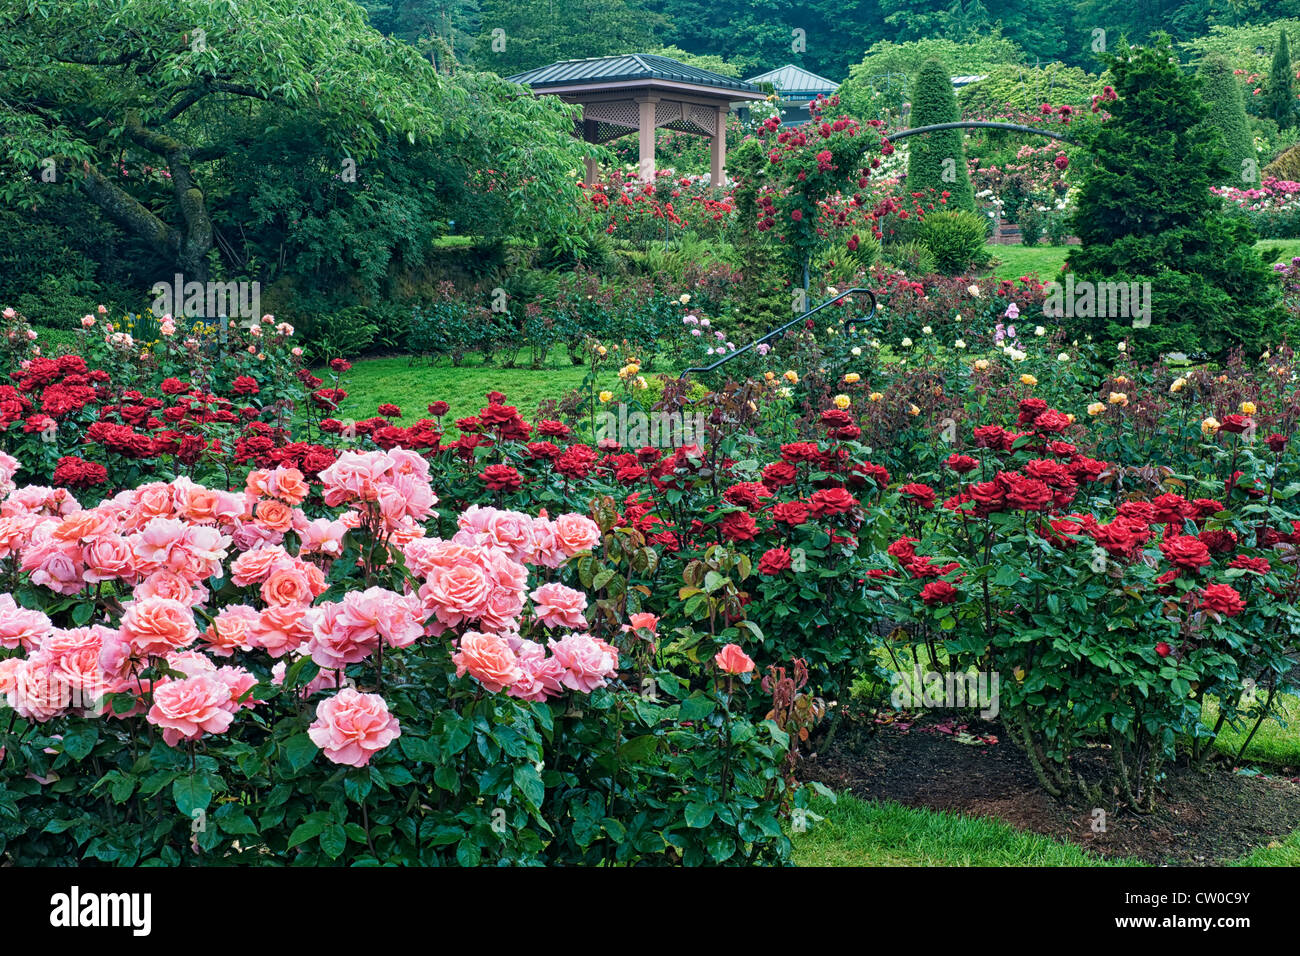 Portland S International Rose Test Garden In Washington Park